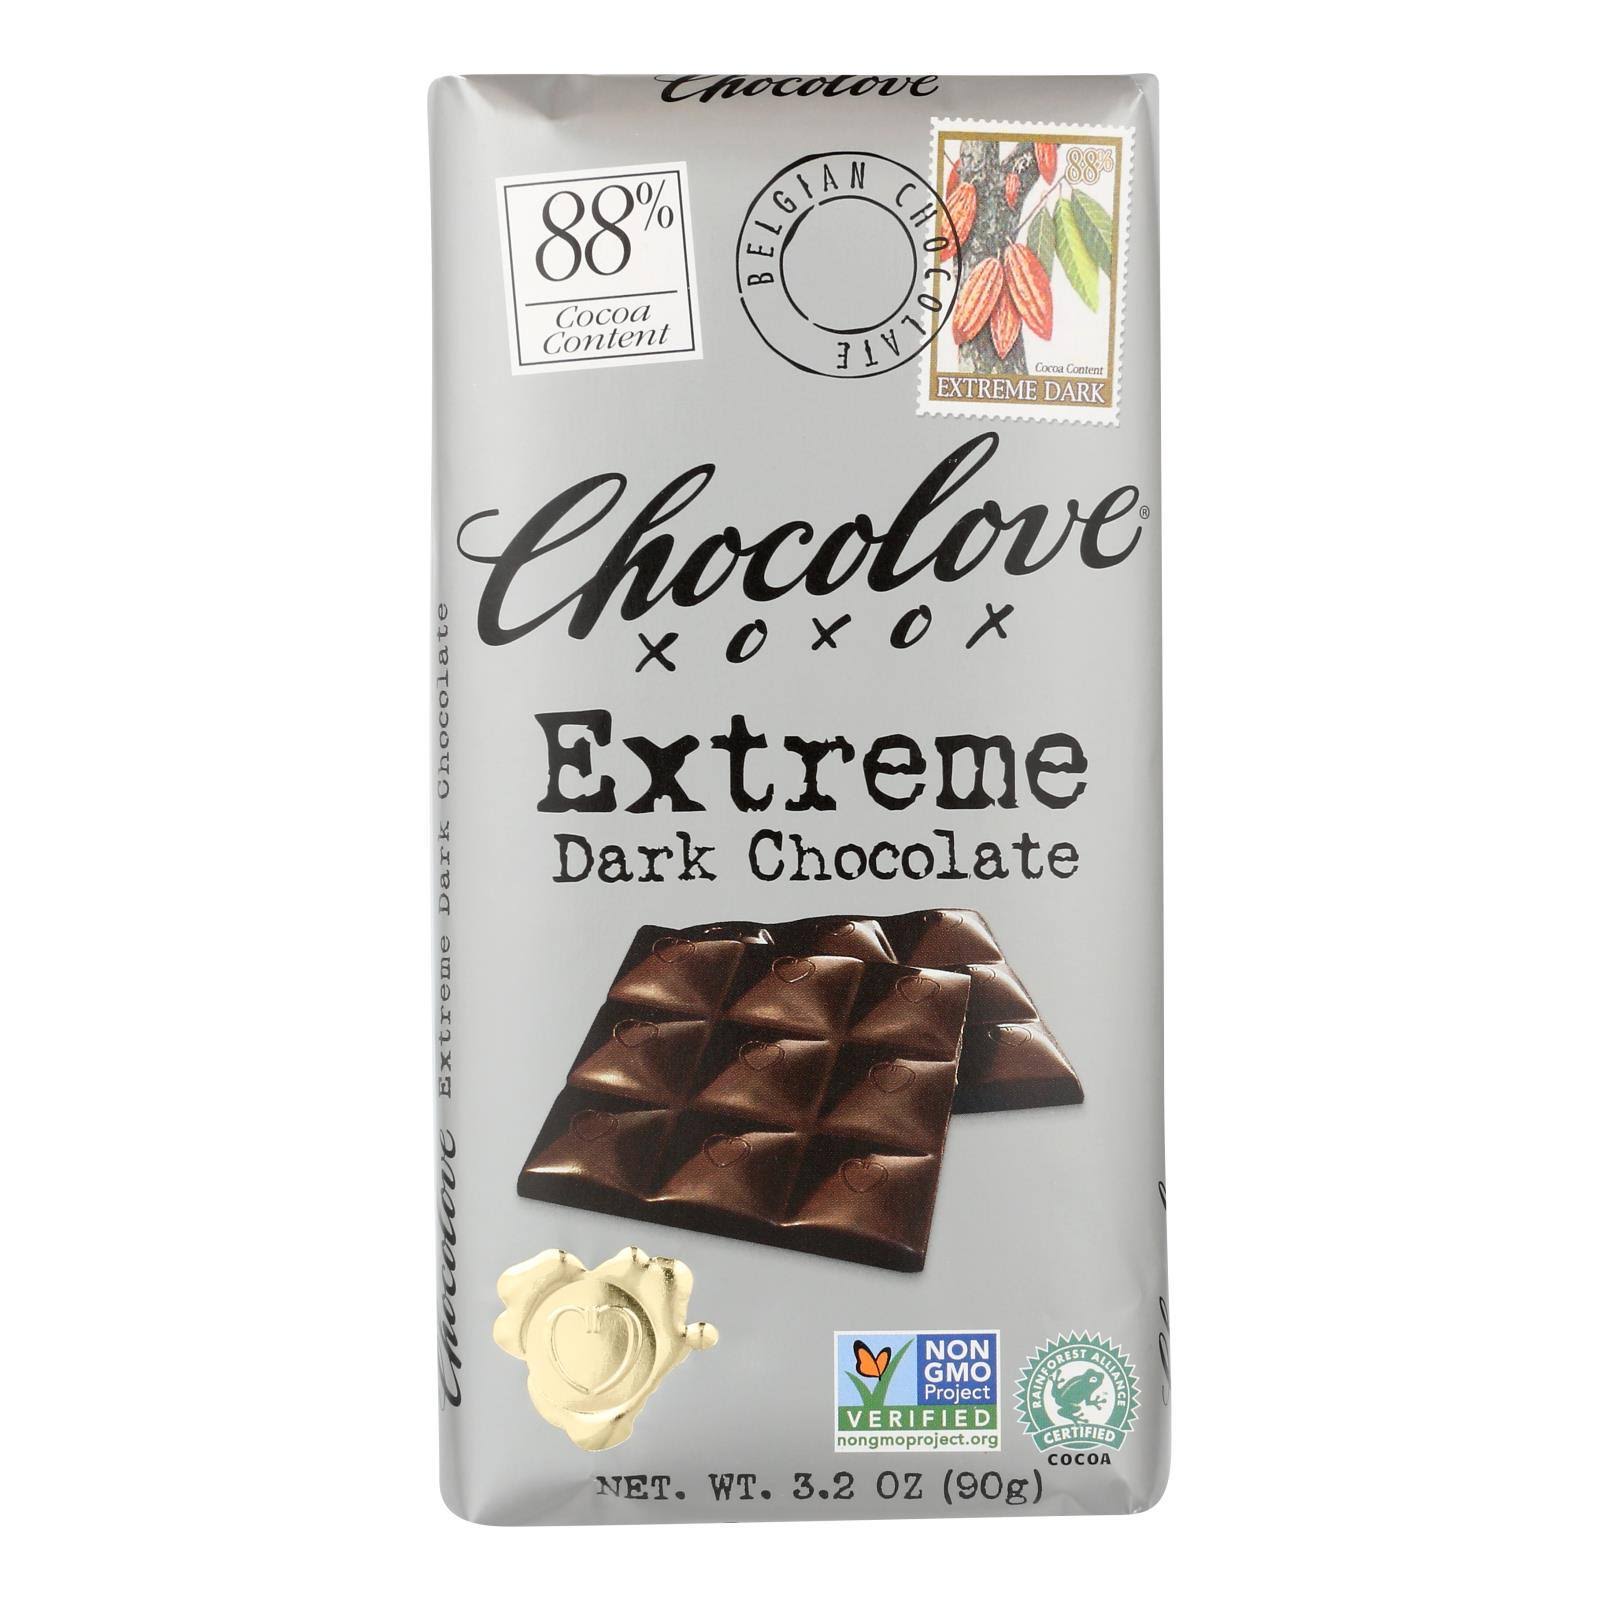 Chocolove 933308 3.2 oz Extreme Dark Chocolate Bar, Pack of 12